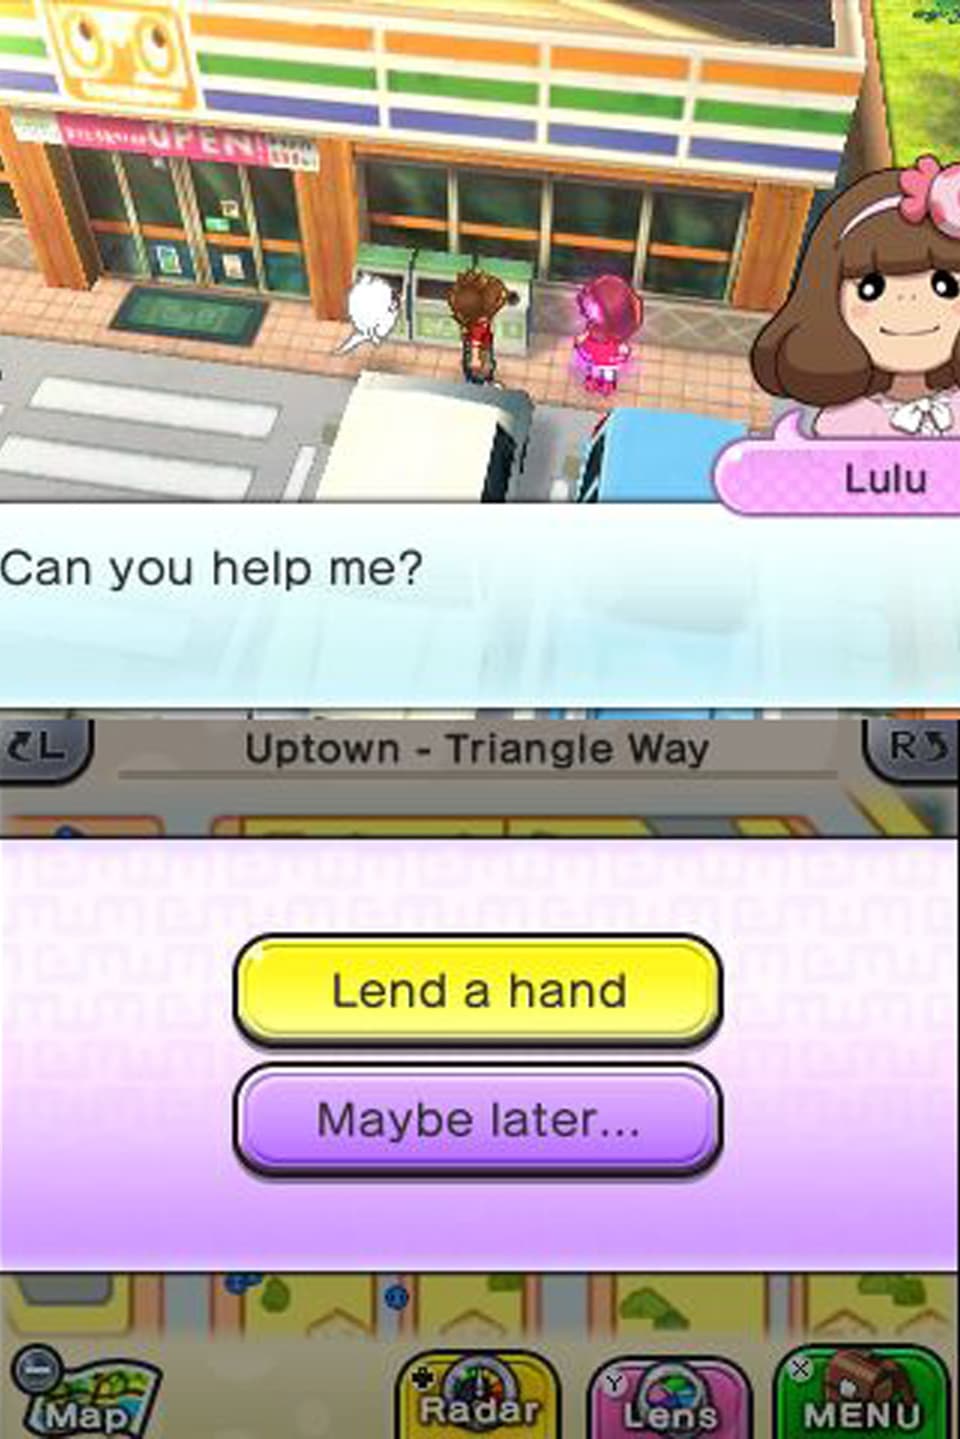 Lulu braucht Hilfe.